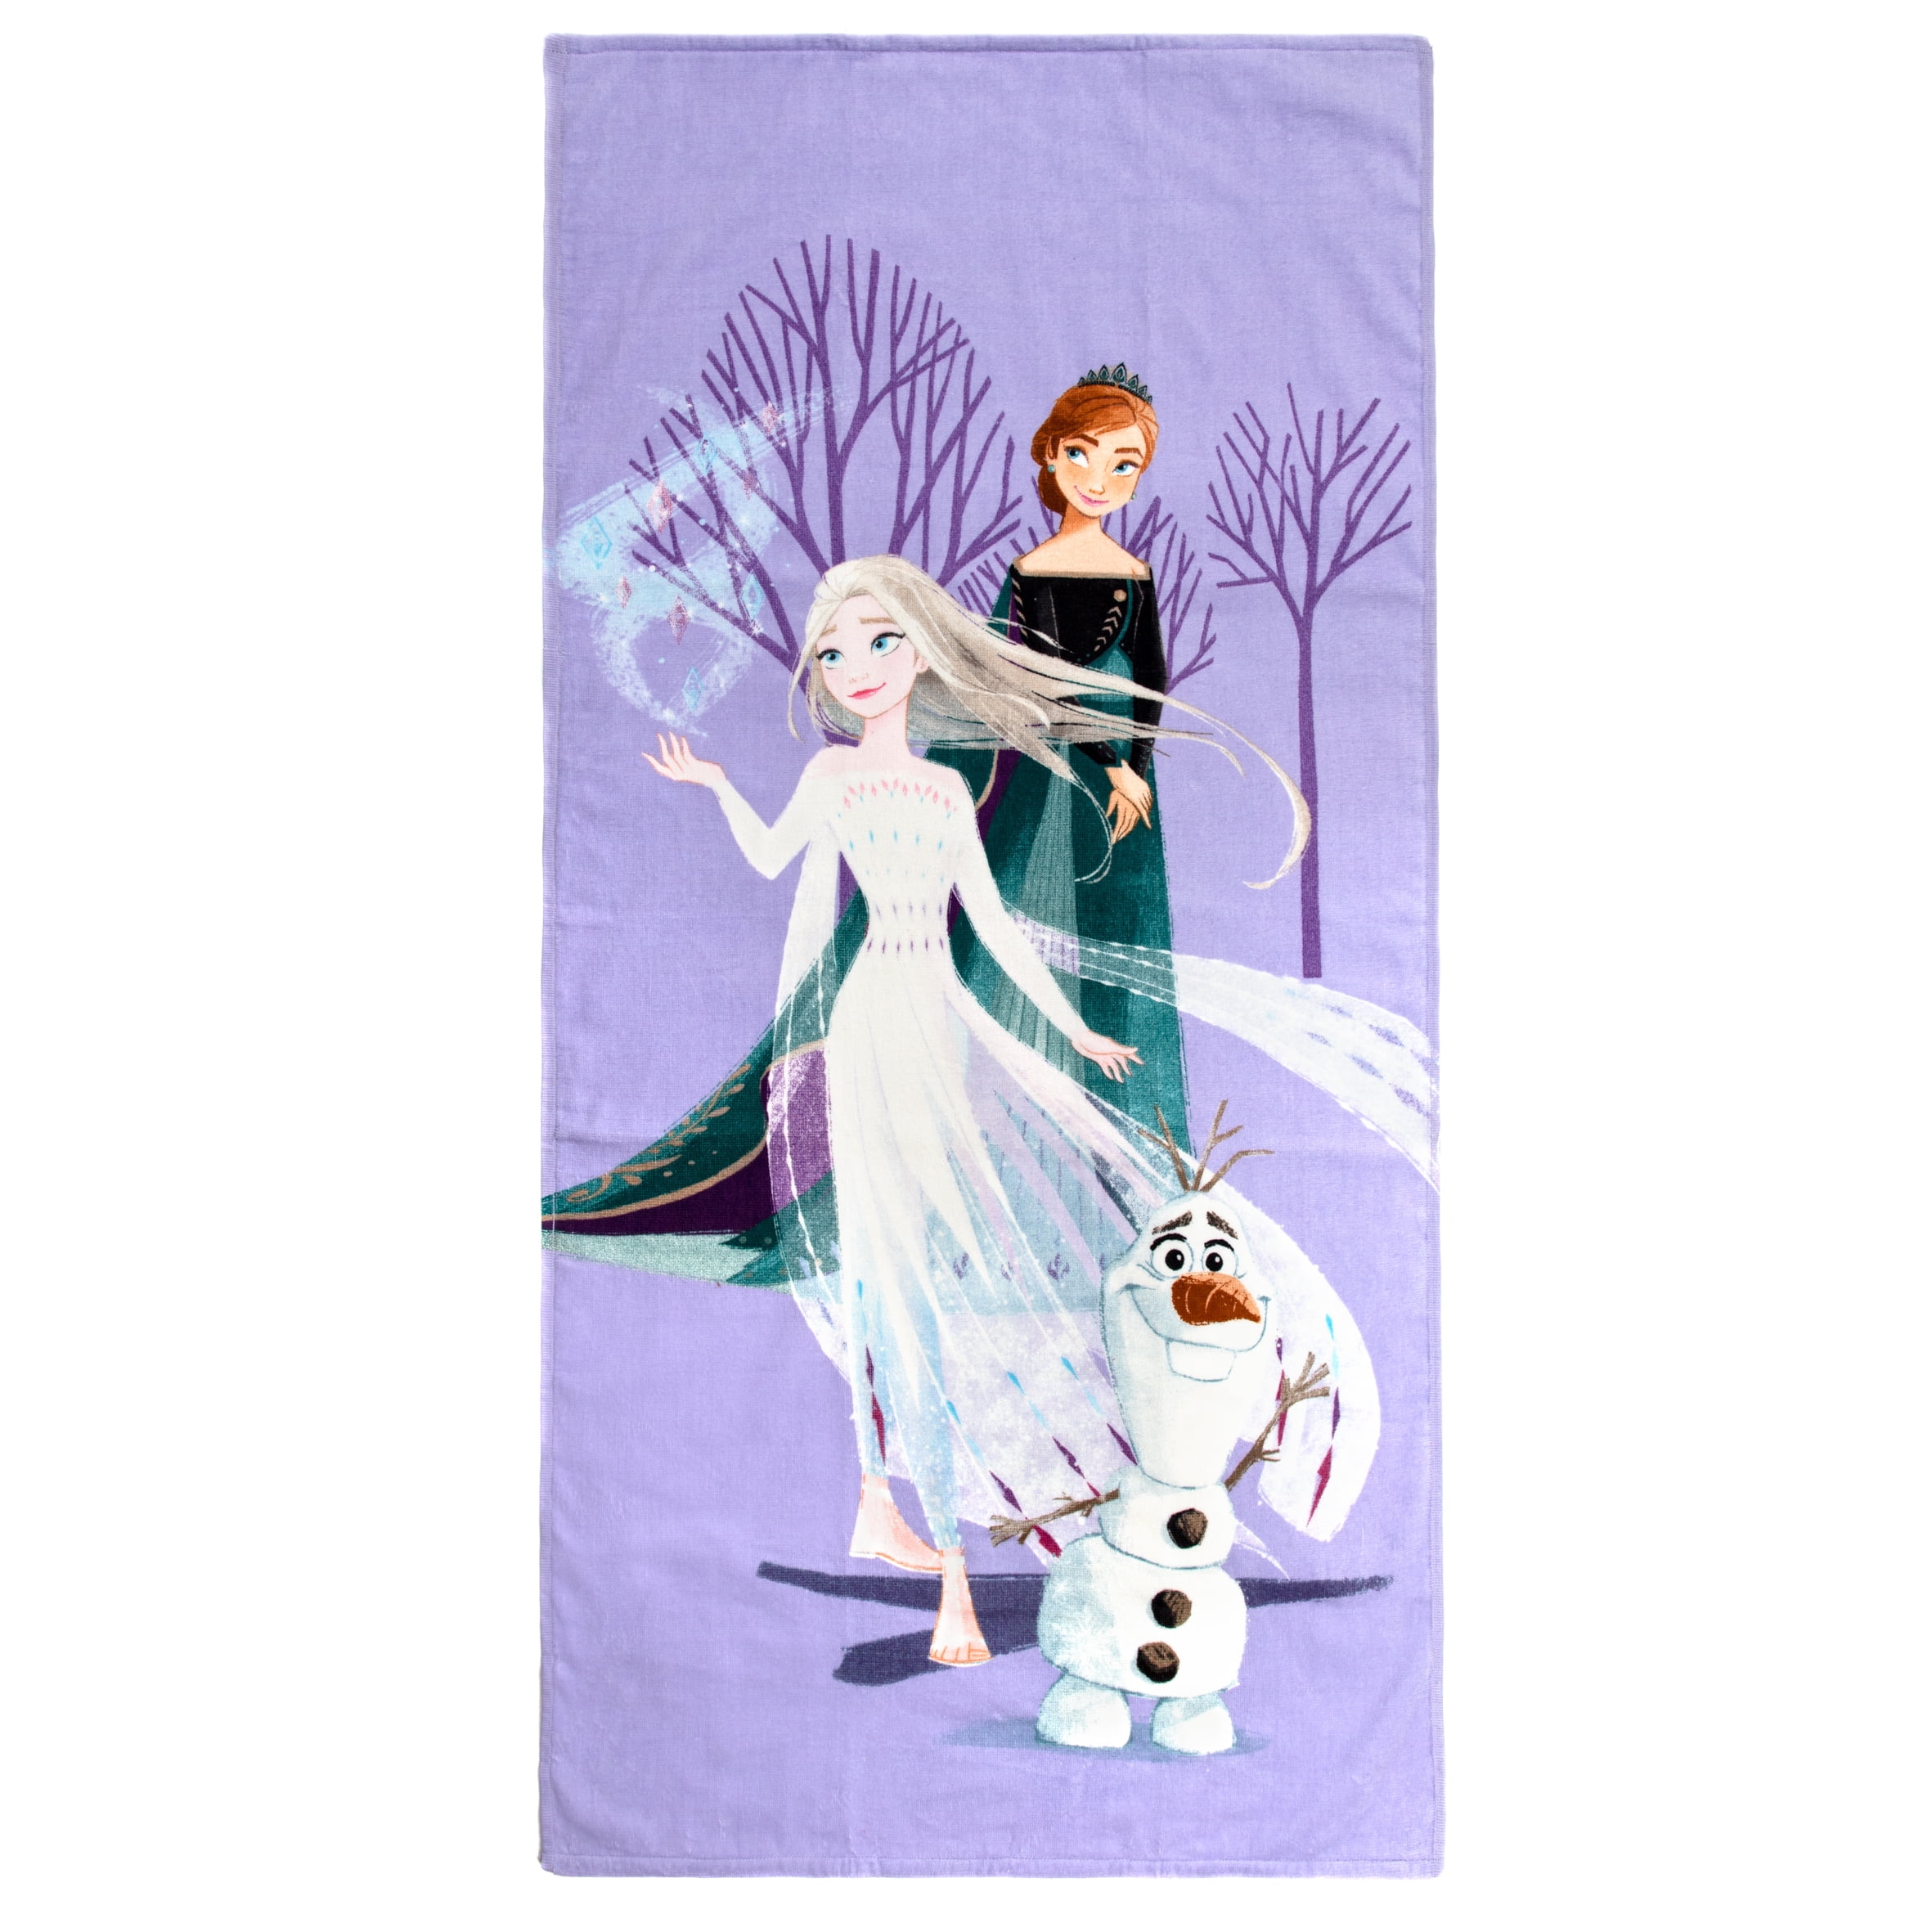 3 x 2pk Disney Frozen Anna & Elsa Boca Towel Clips Beach Holiday Holder Kid Olaf 